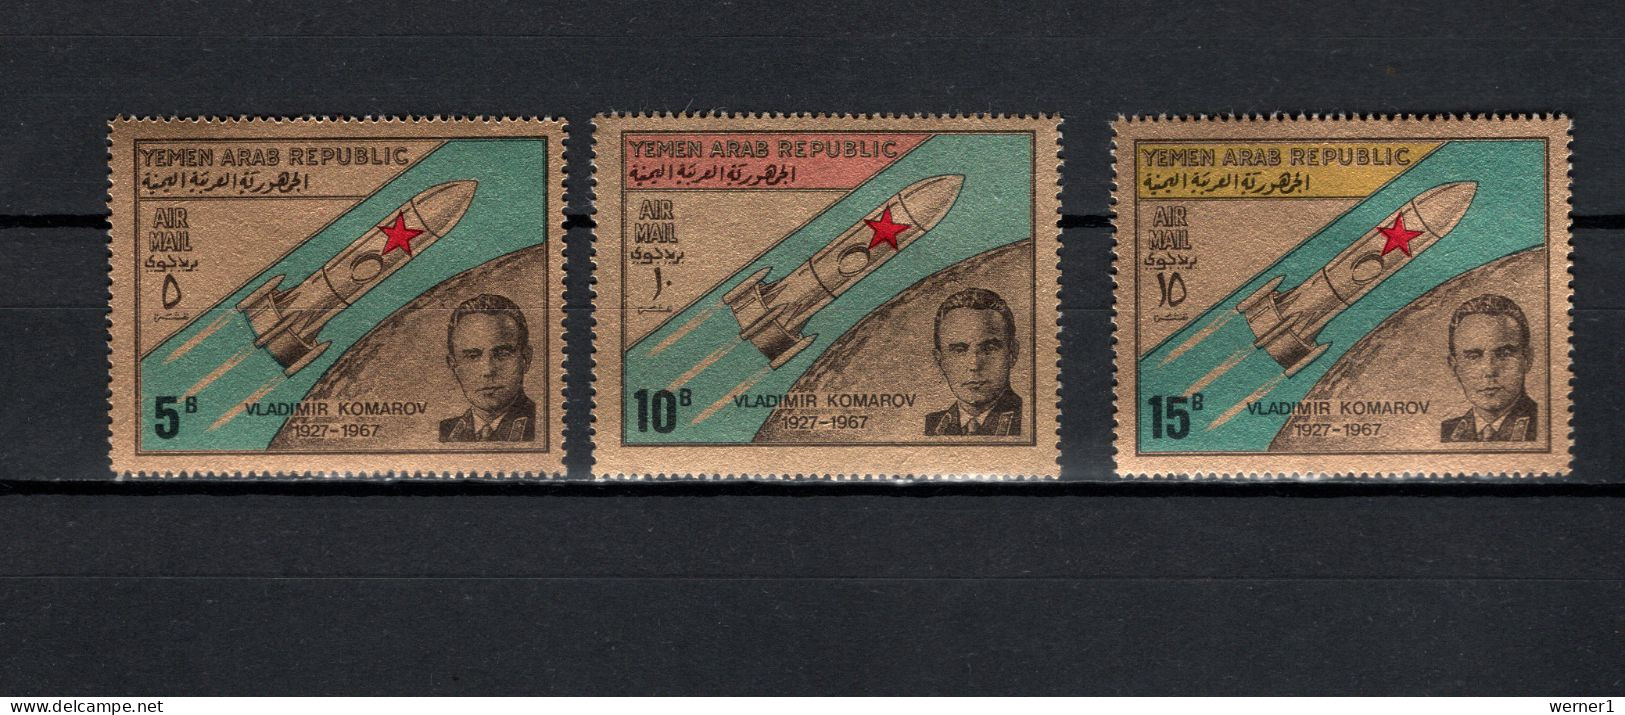 Yemen Arab Republic 1968 Space, Vladimir Komarov Set Of 3 Golden Colour MNH - Asie